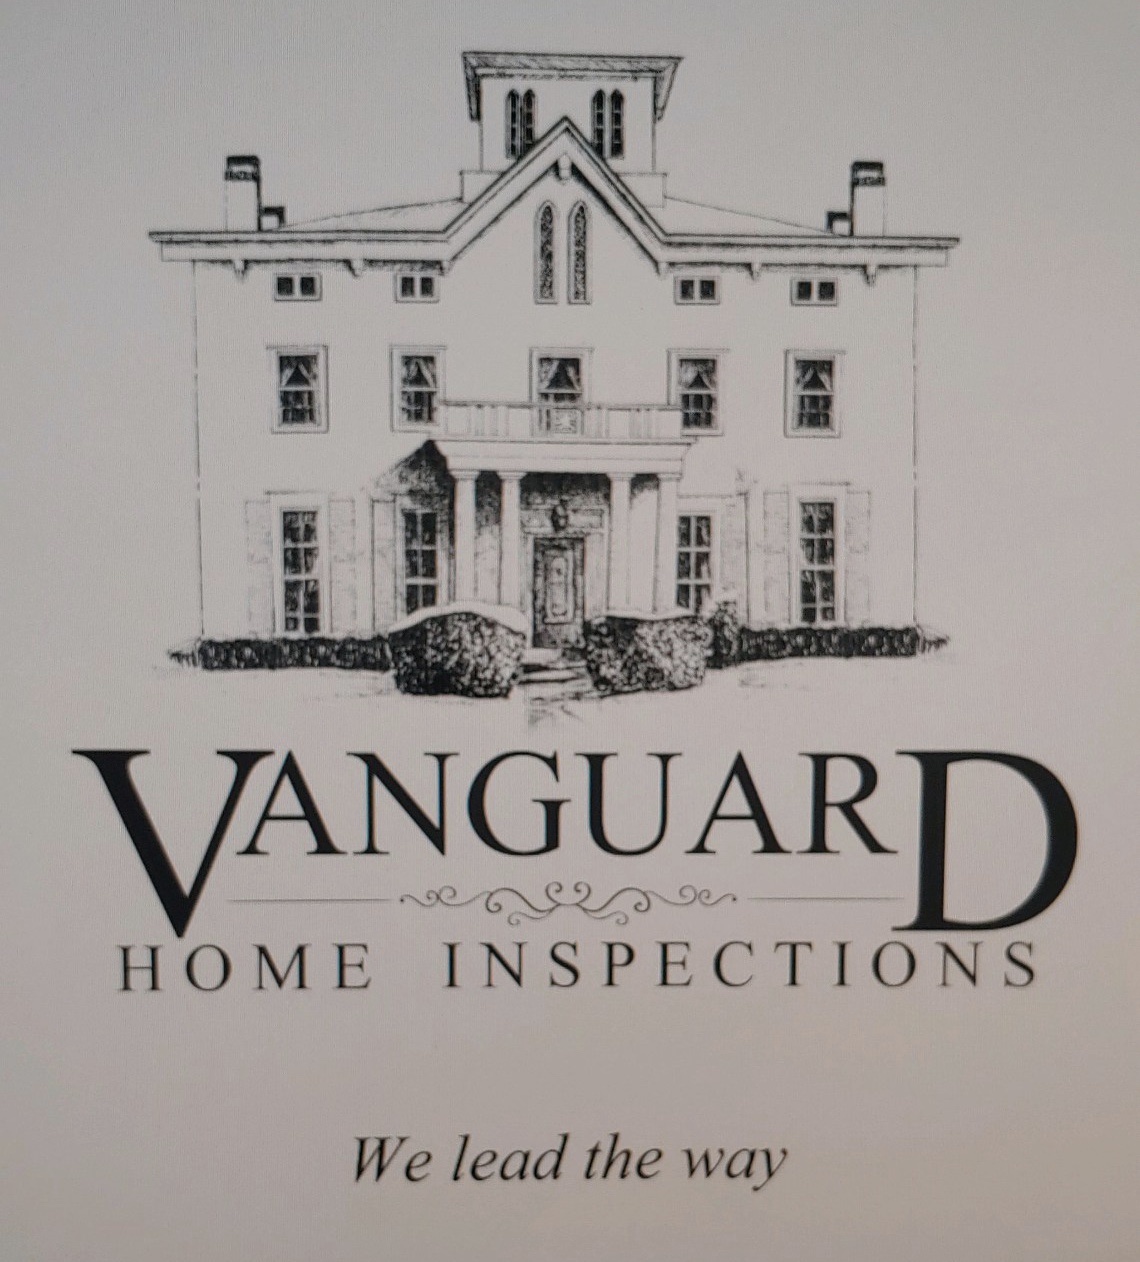 Vanguard Home Inspections Logo